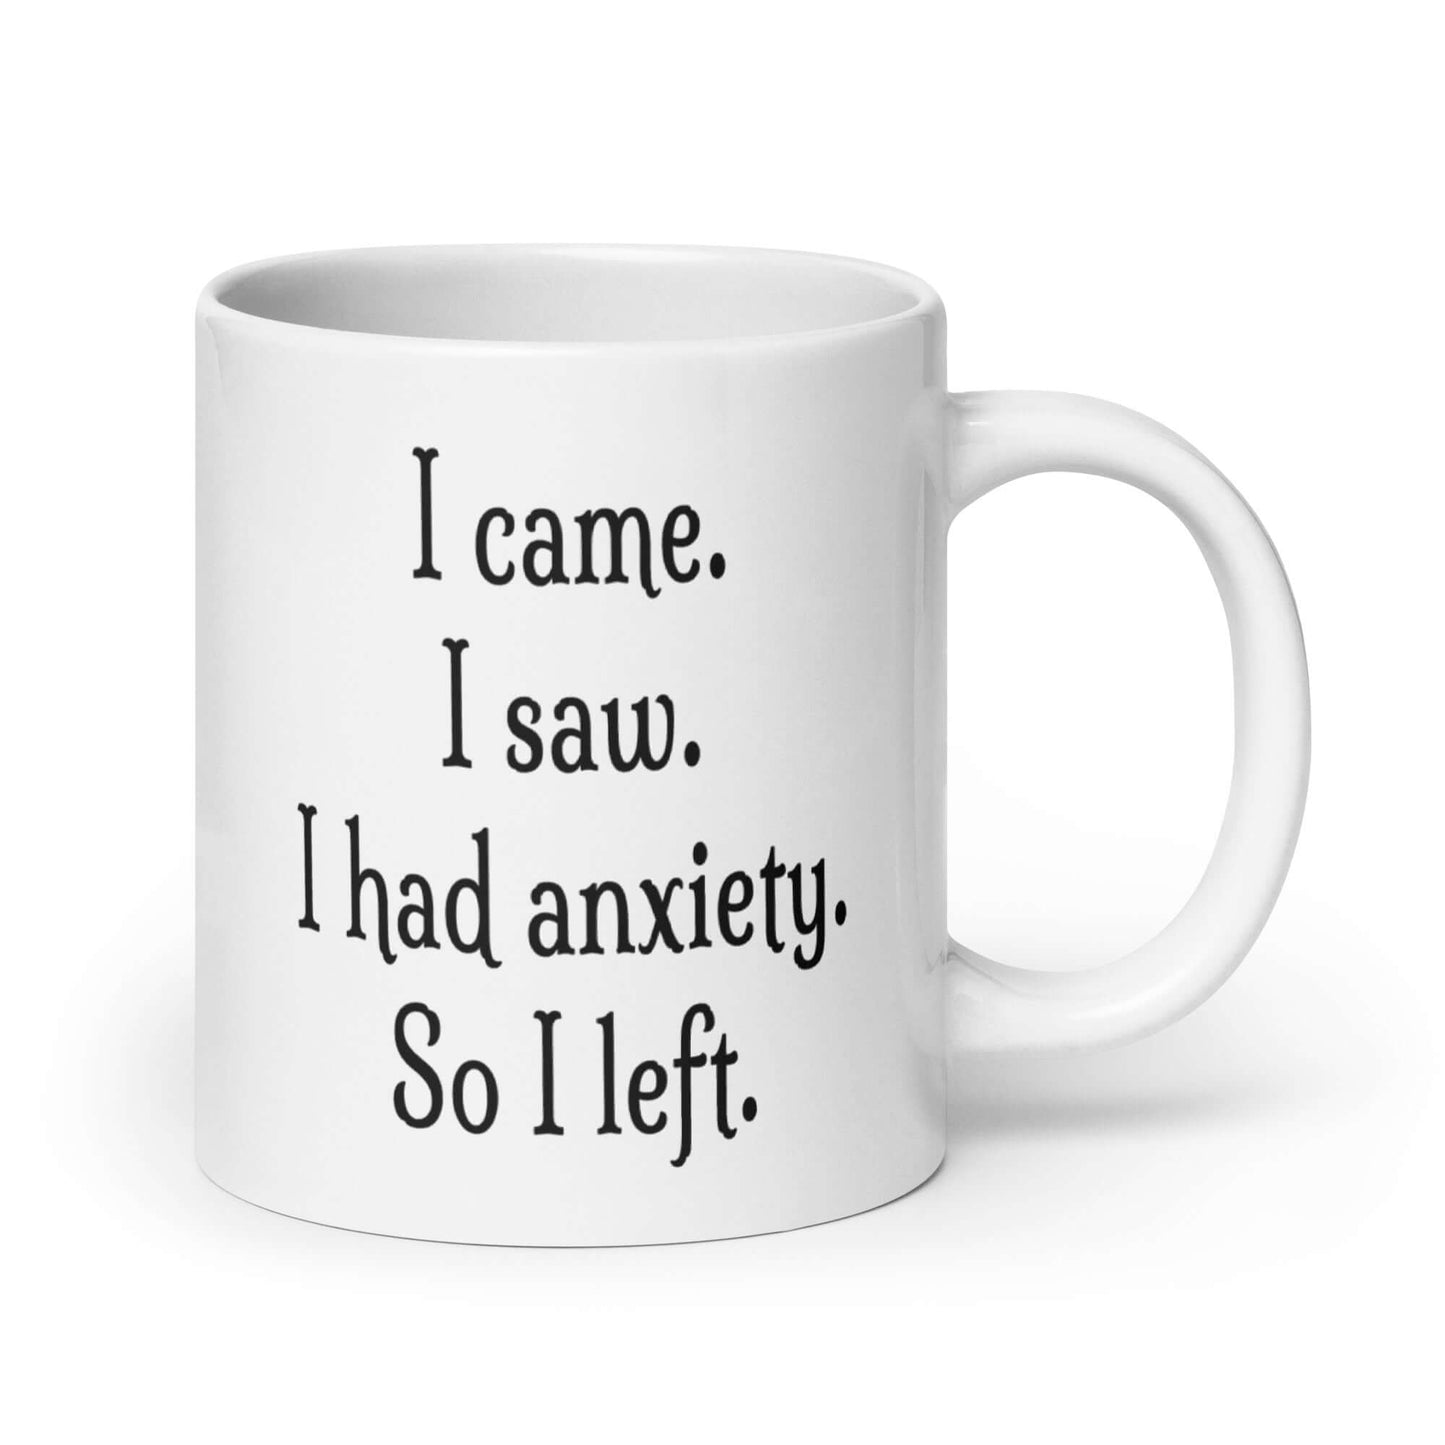 Funny anxiety introvert joke mug